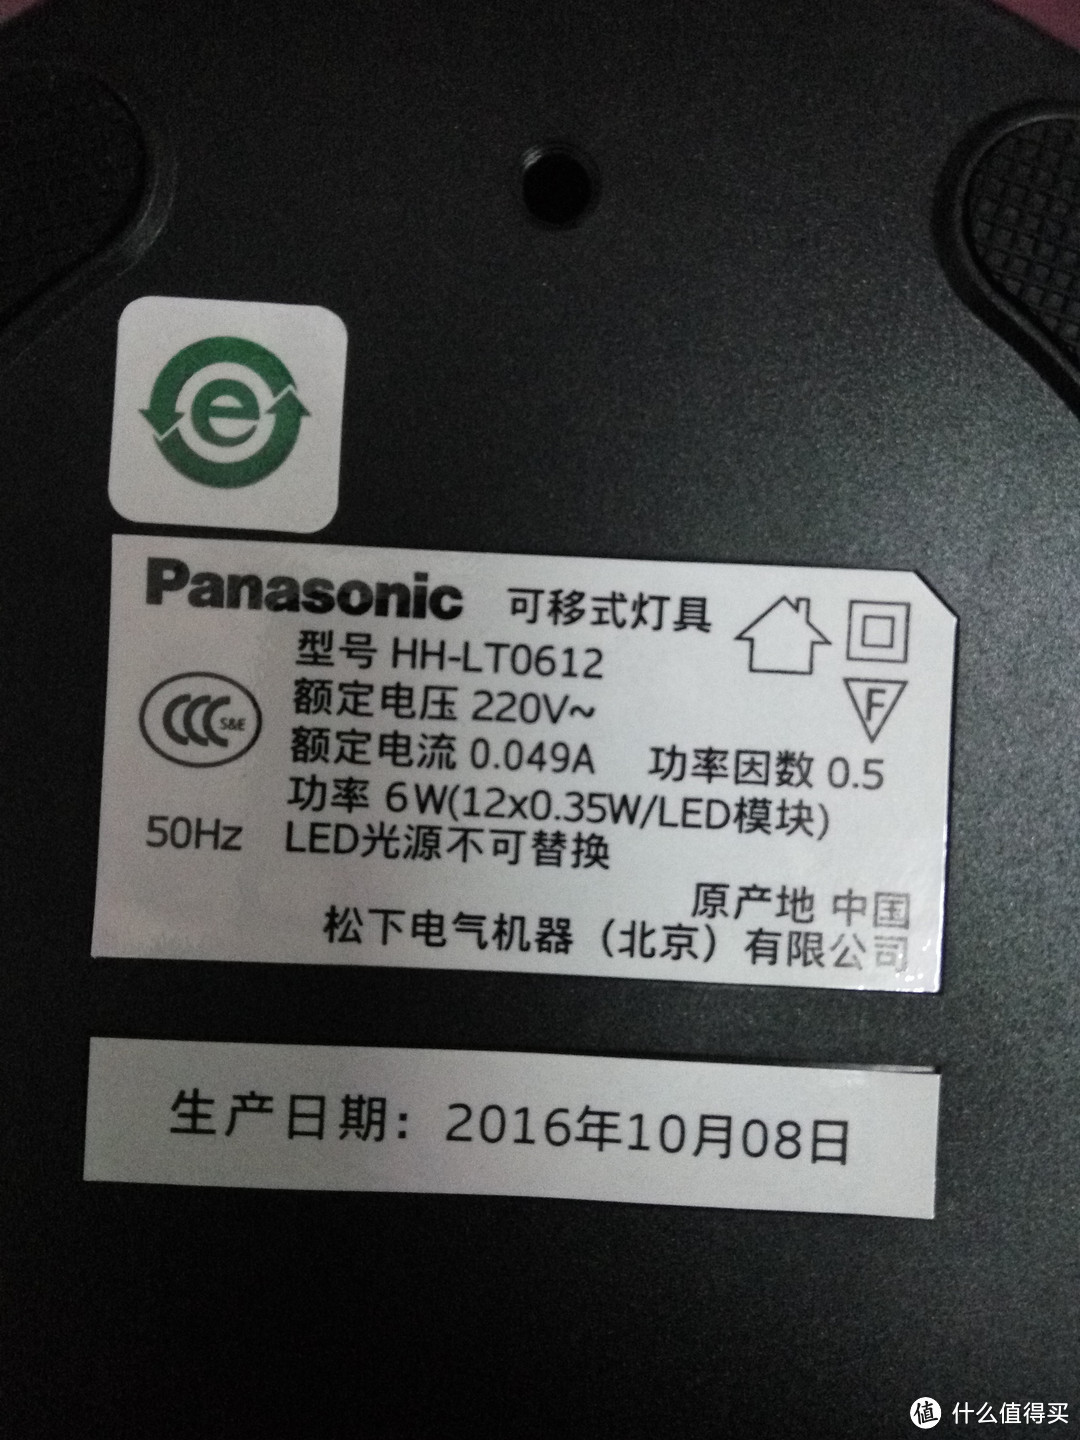 Panasonic 松下 HH-LT0612 六段无极调光台灯开箱体验